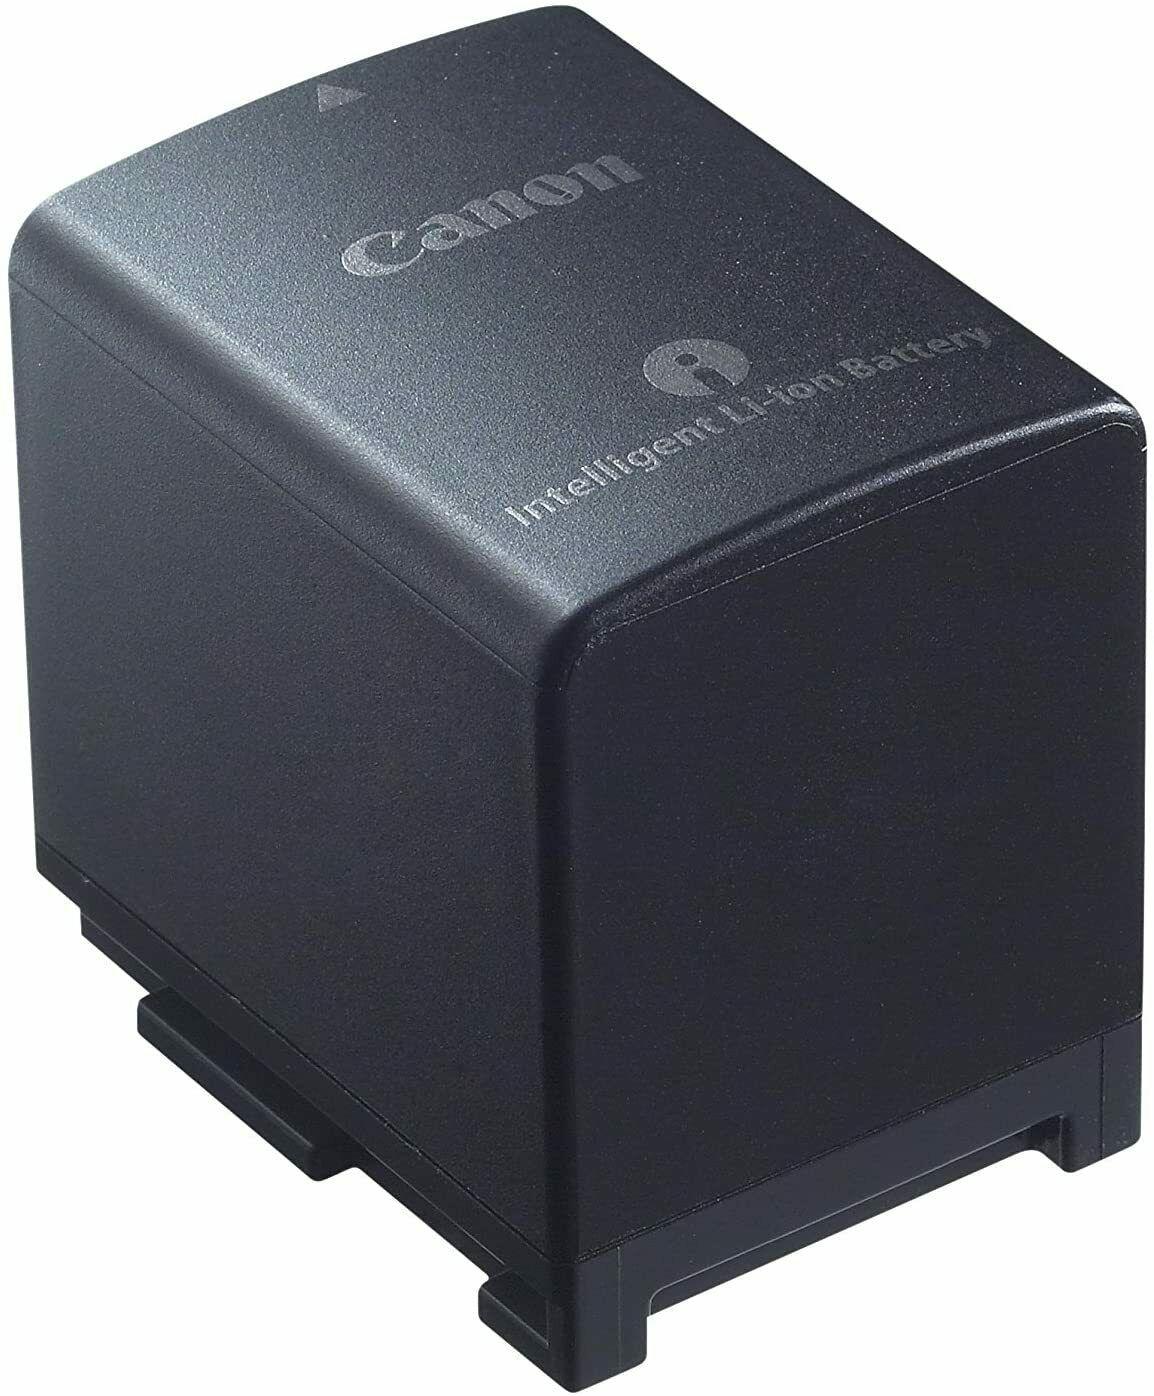 Canon BP-820 Battery Lithium-Ion 1700mAh